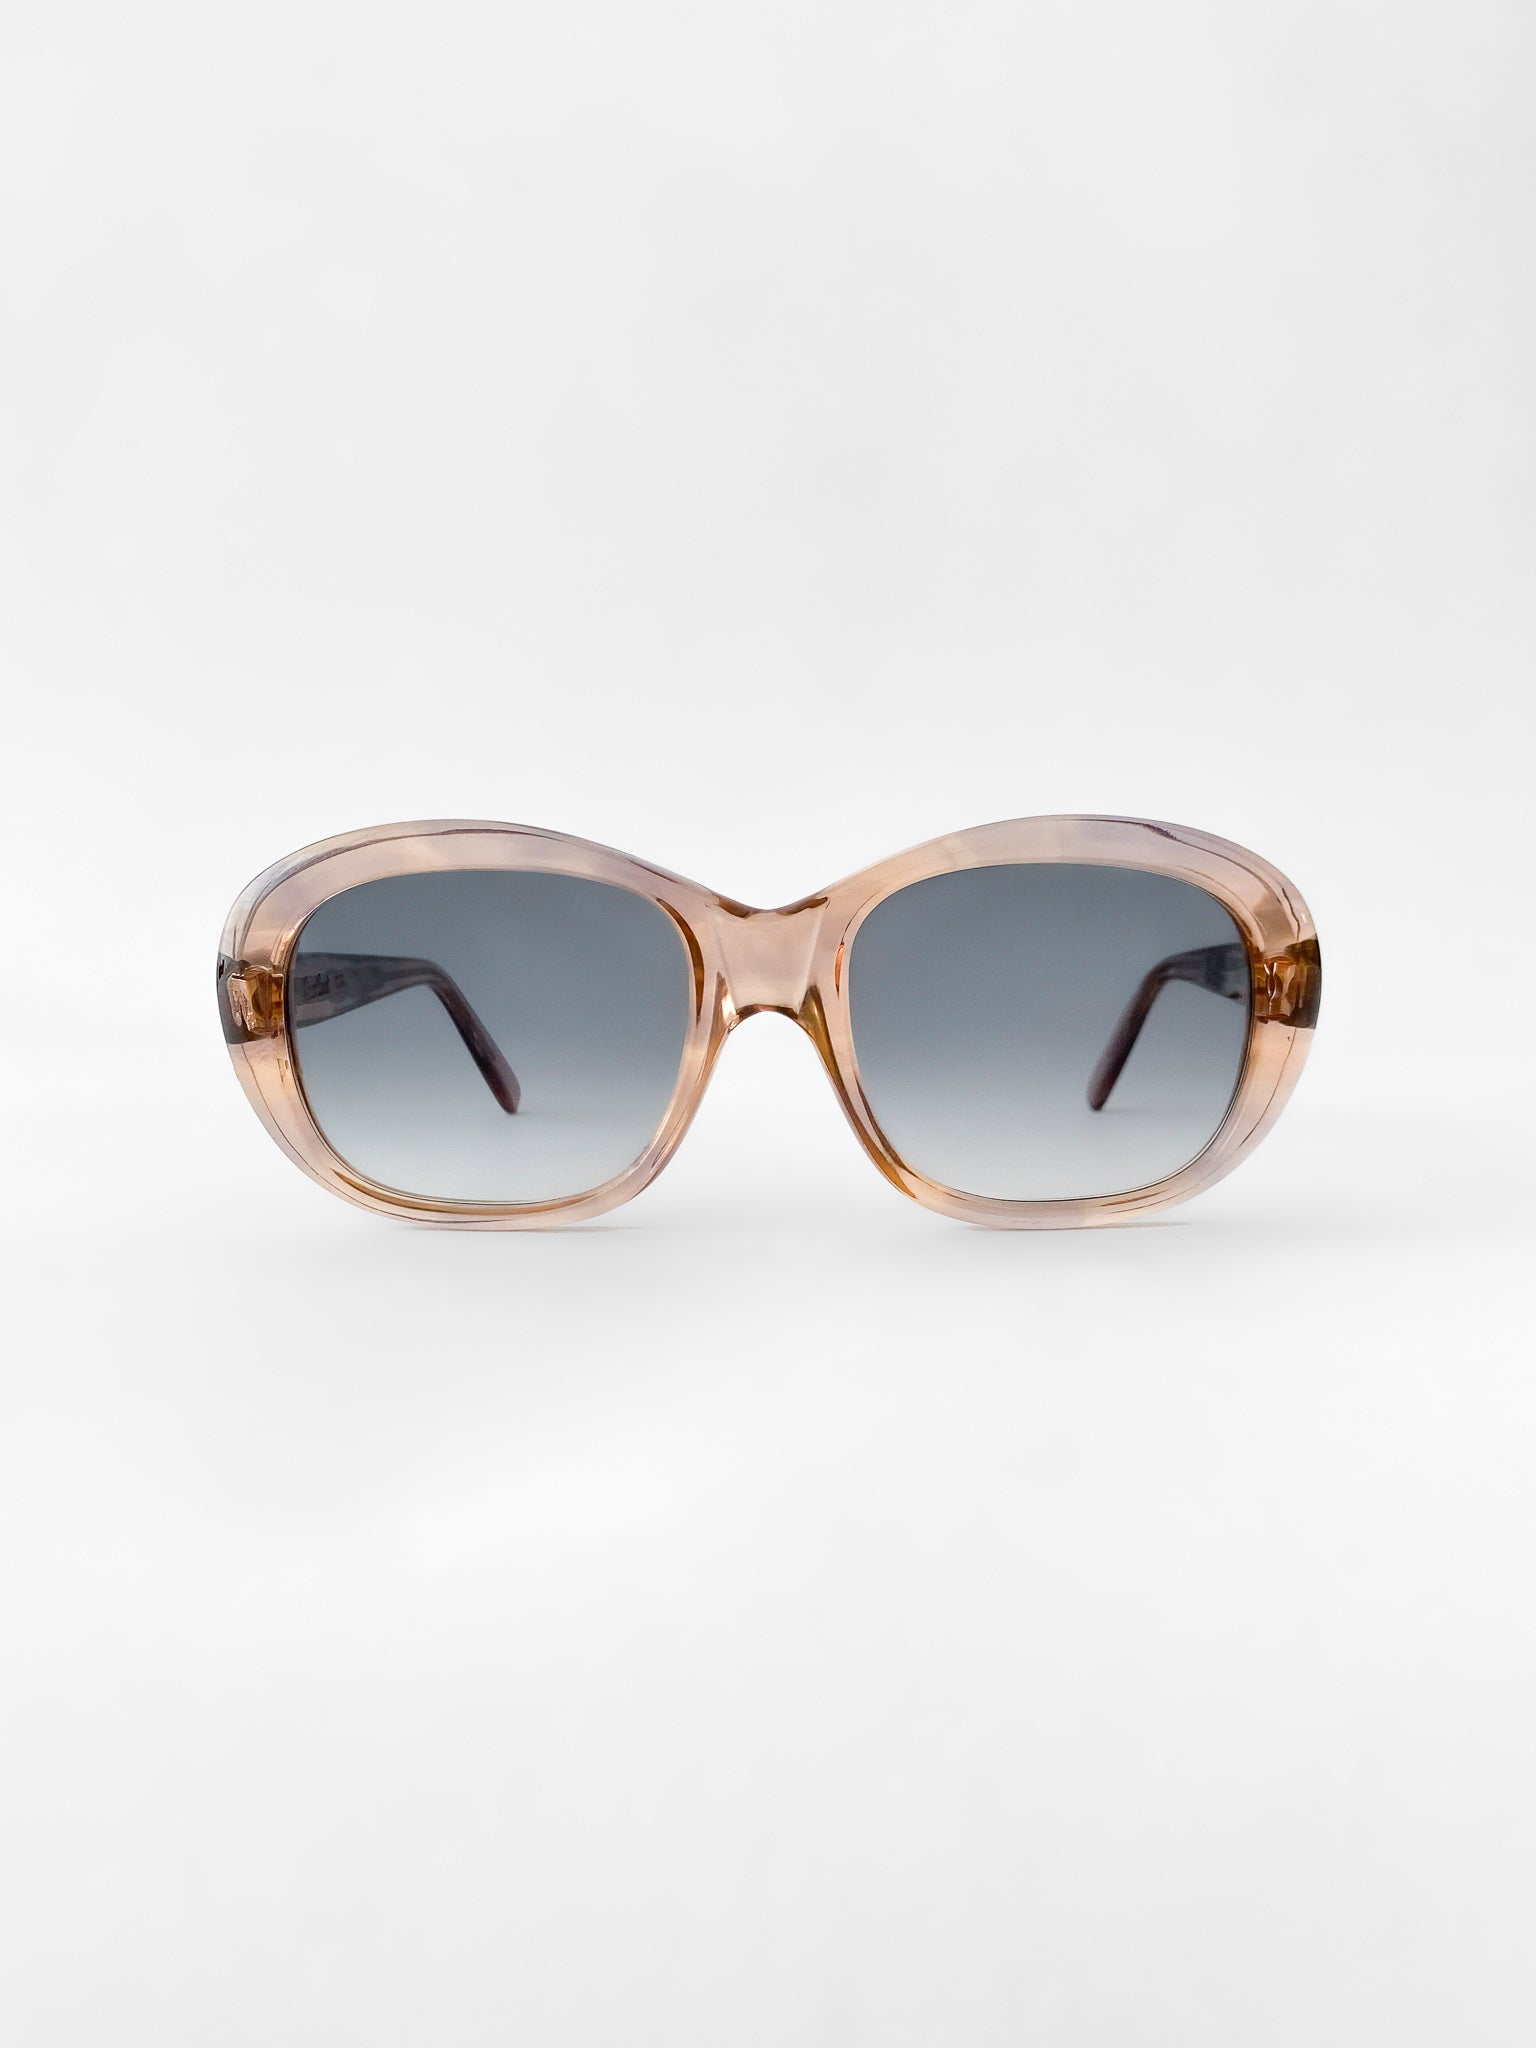 70's oval sunglasses